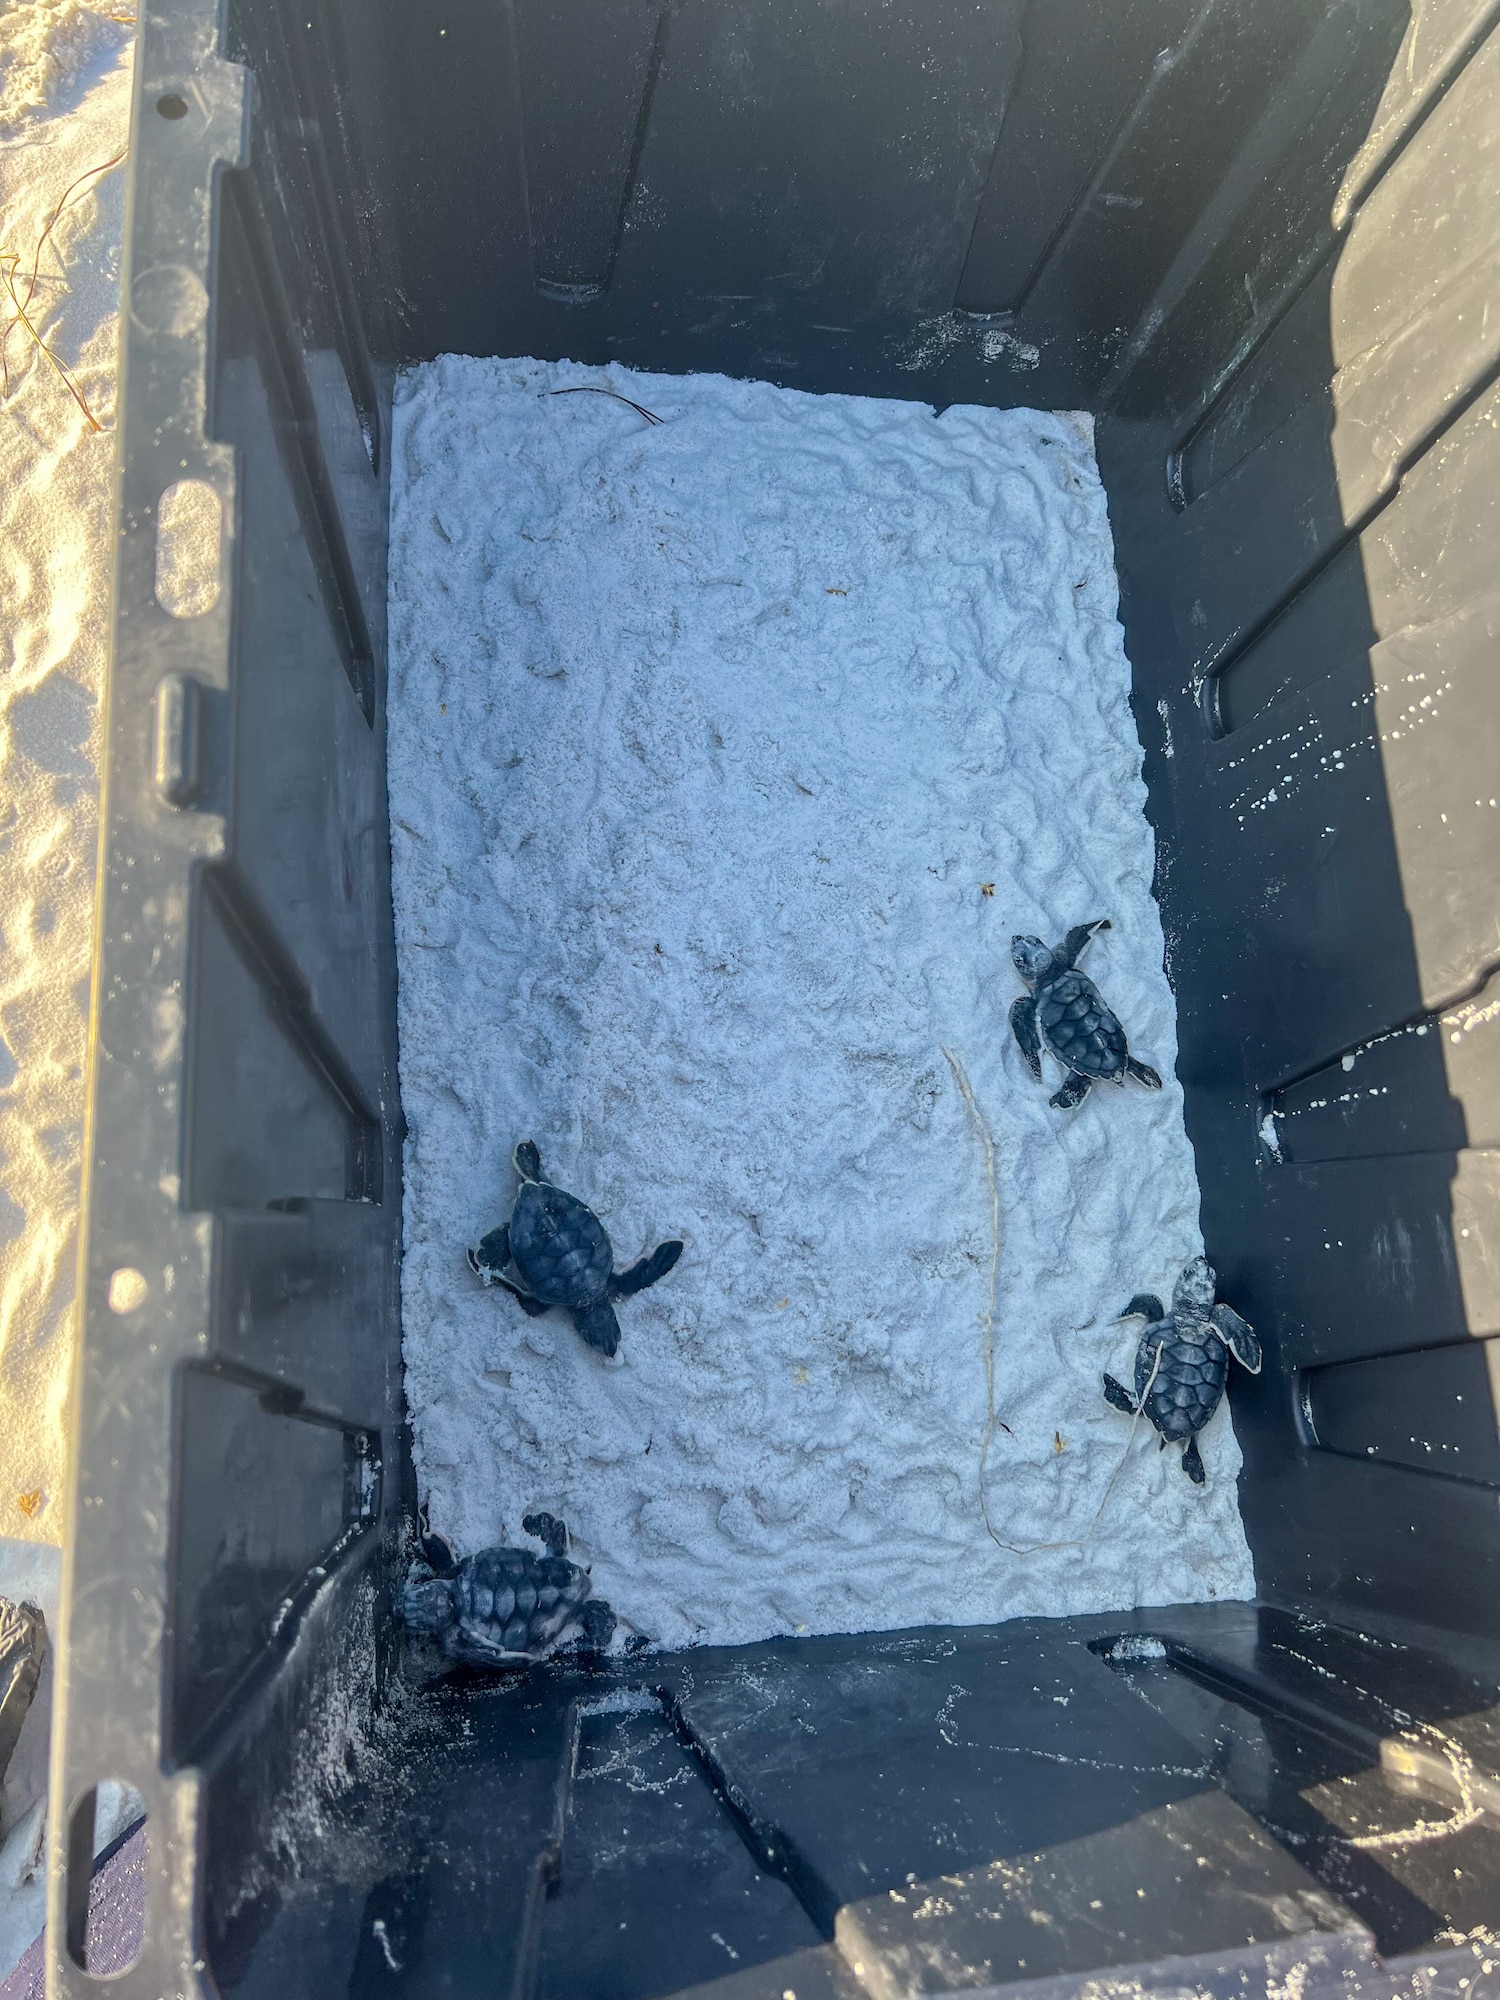 Baby sea turtles being transferred  in bucket.